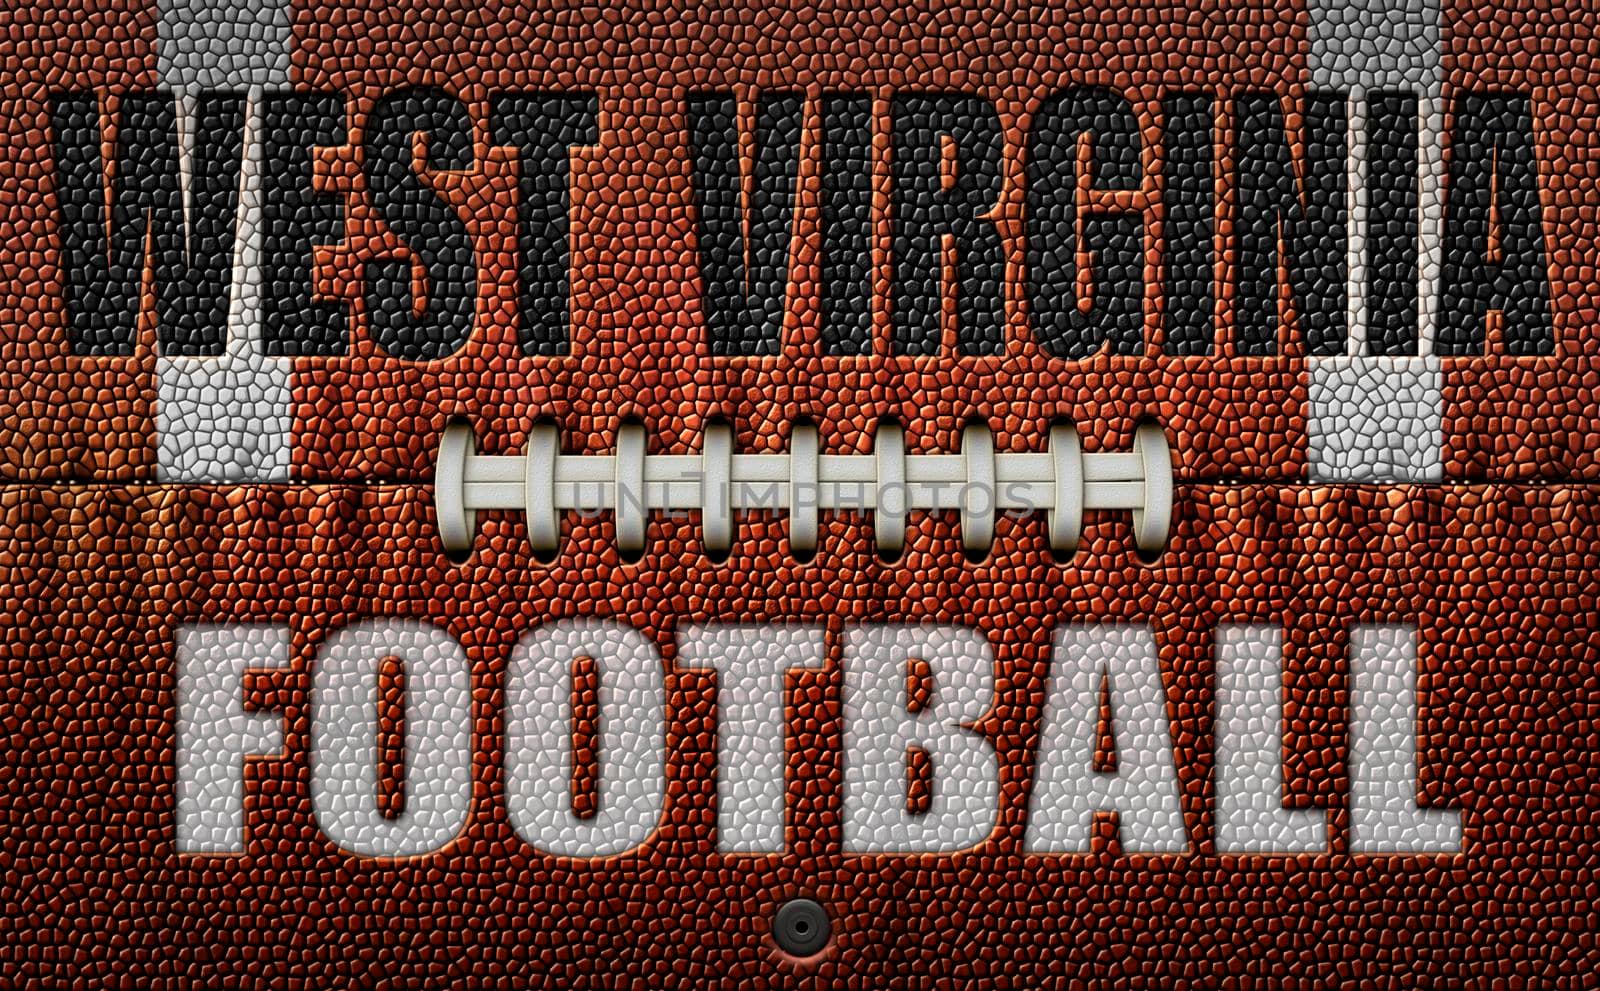 West Virginia Football Text on a Flattened Football by jimlarkin